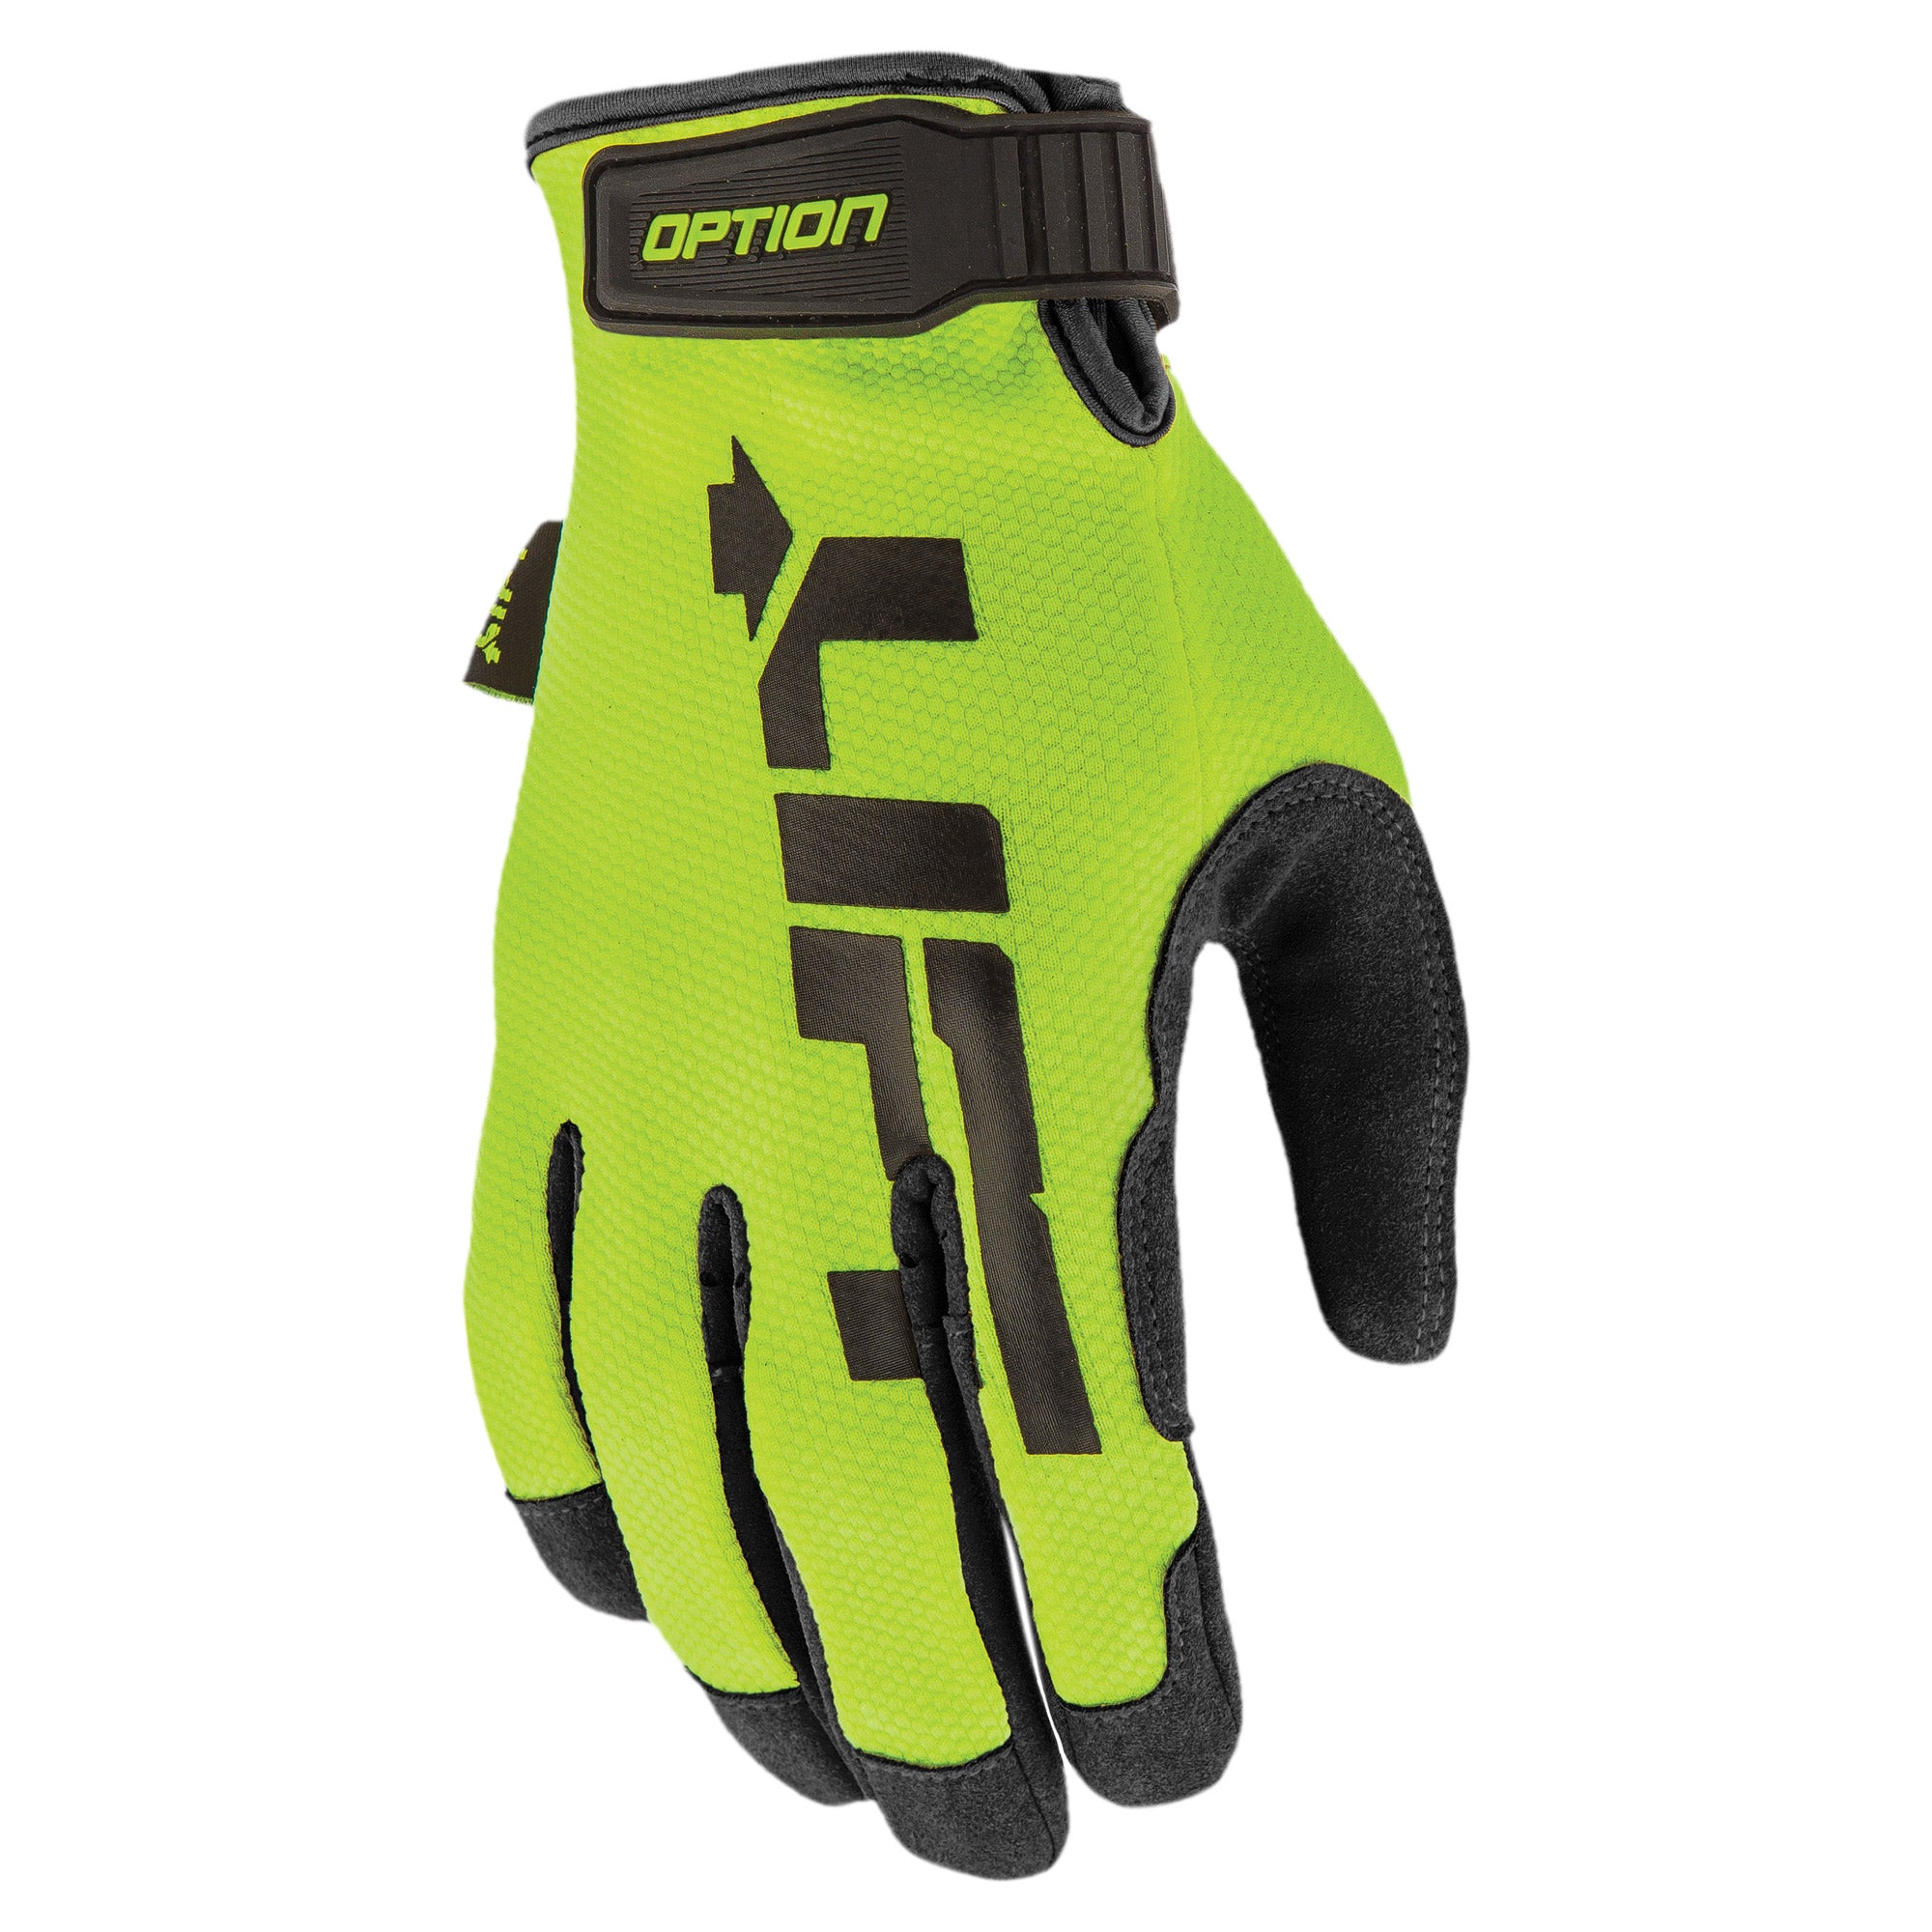 Winter Monkey Grip™ Gloves – 12 Pairs/Case – CG Industrial Safety